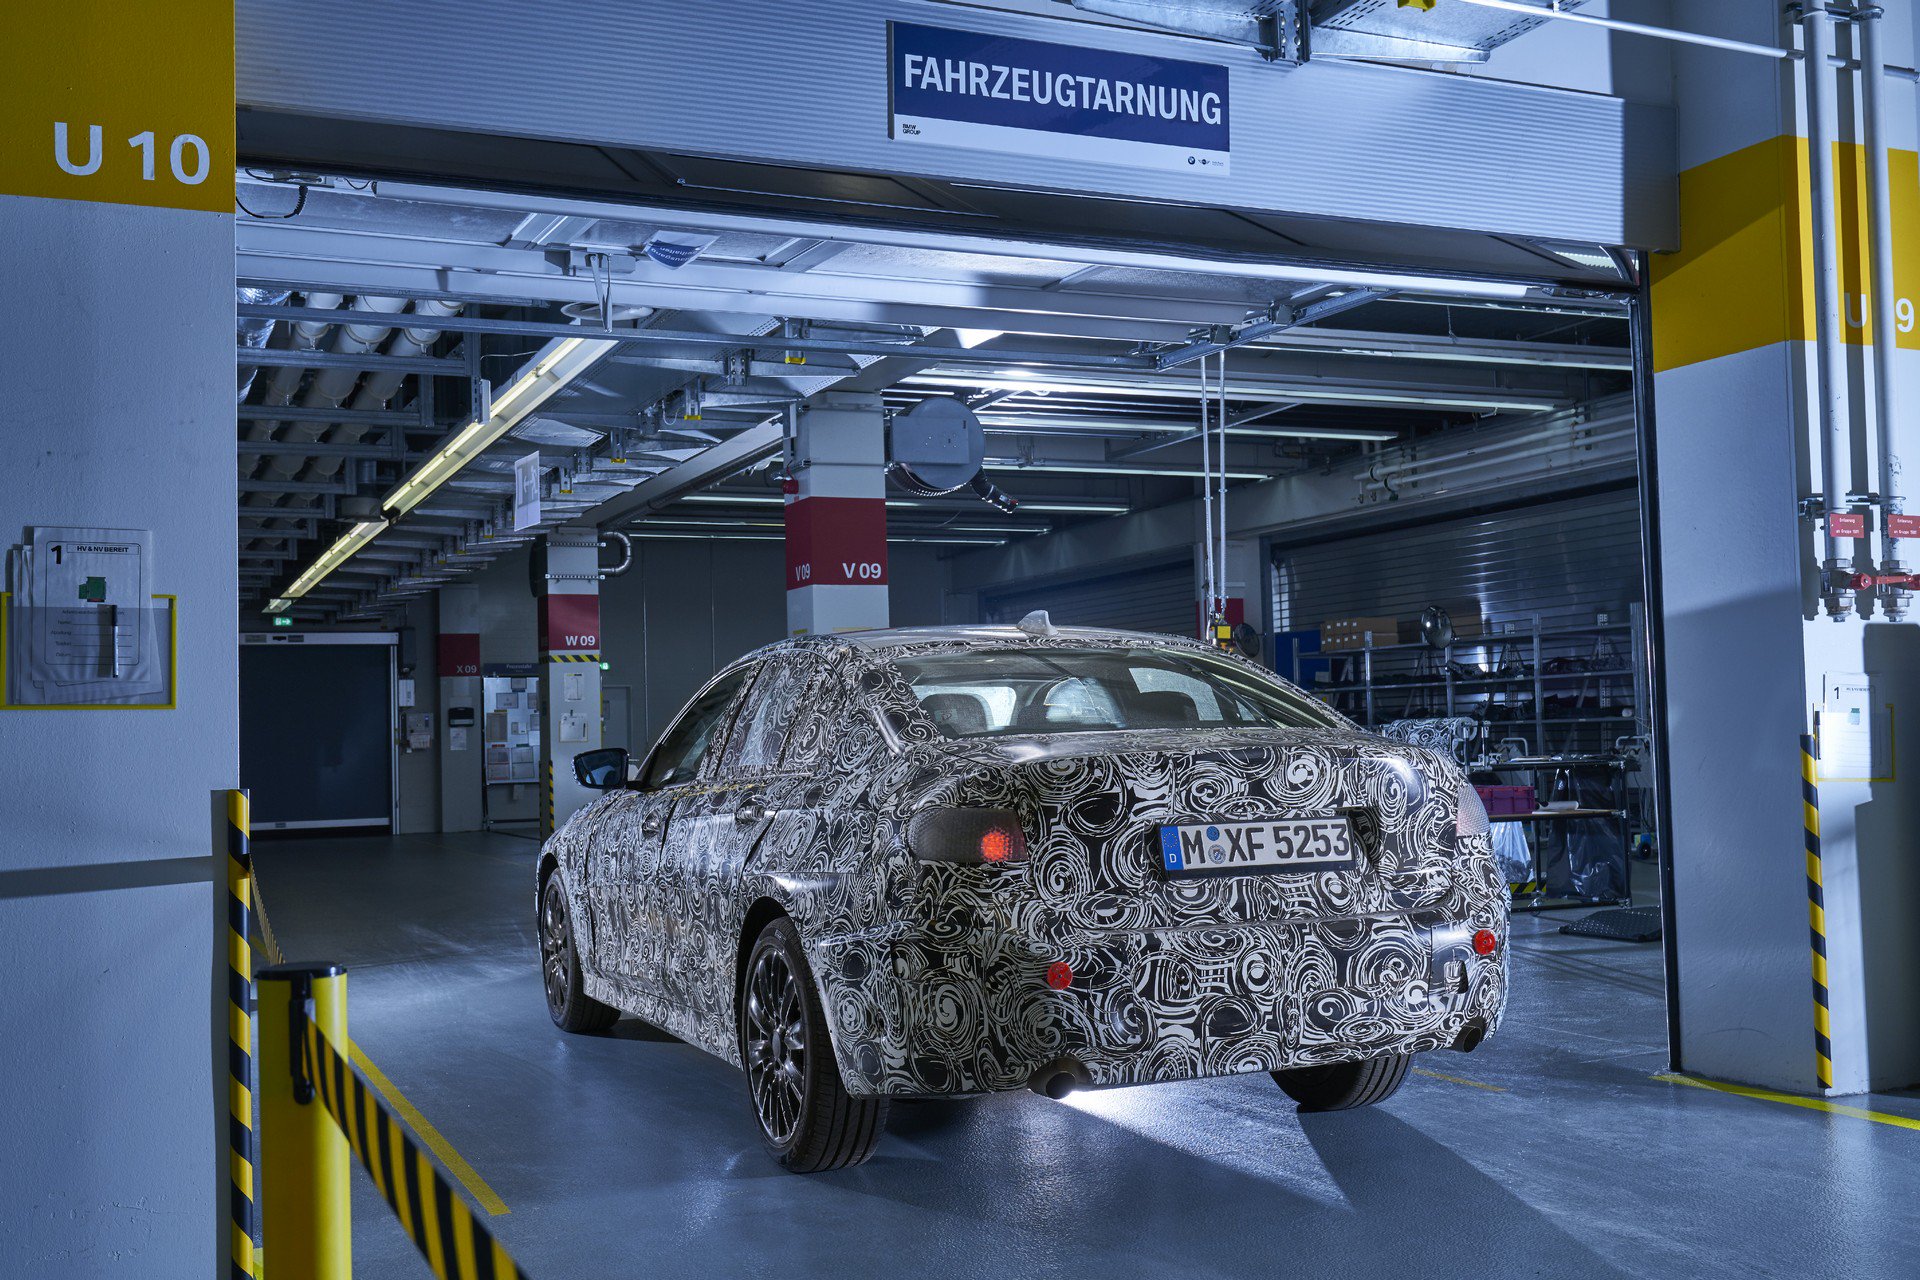 Yeni 2019 BMW 3 Serisi resim galerisi (19.08.2018)